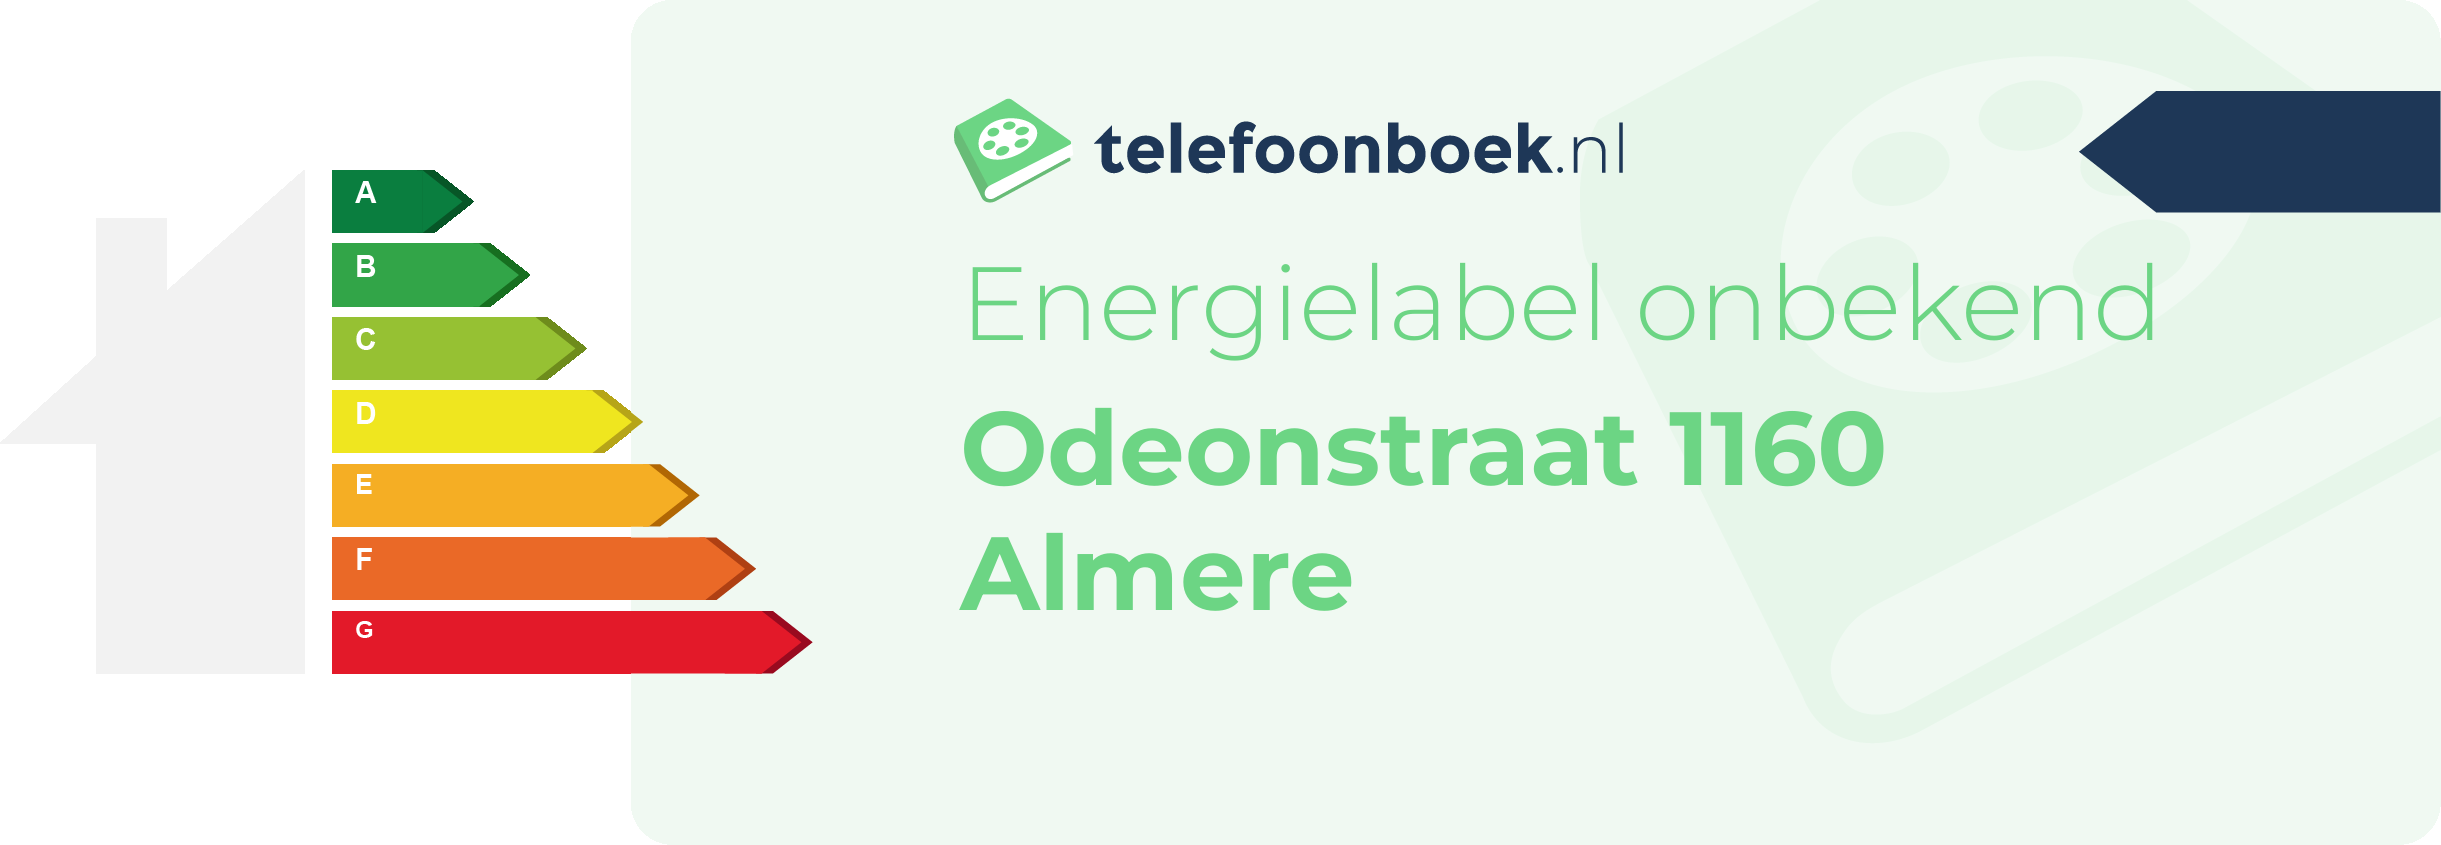 Energielabel Odeonstraat 1160 Almere